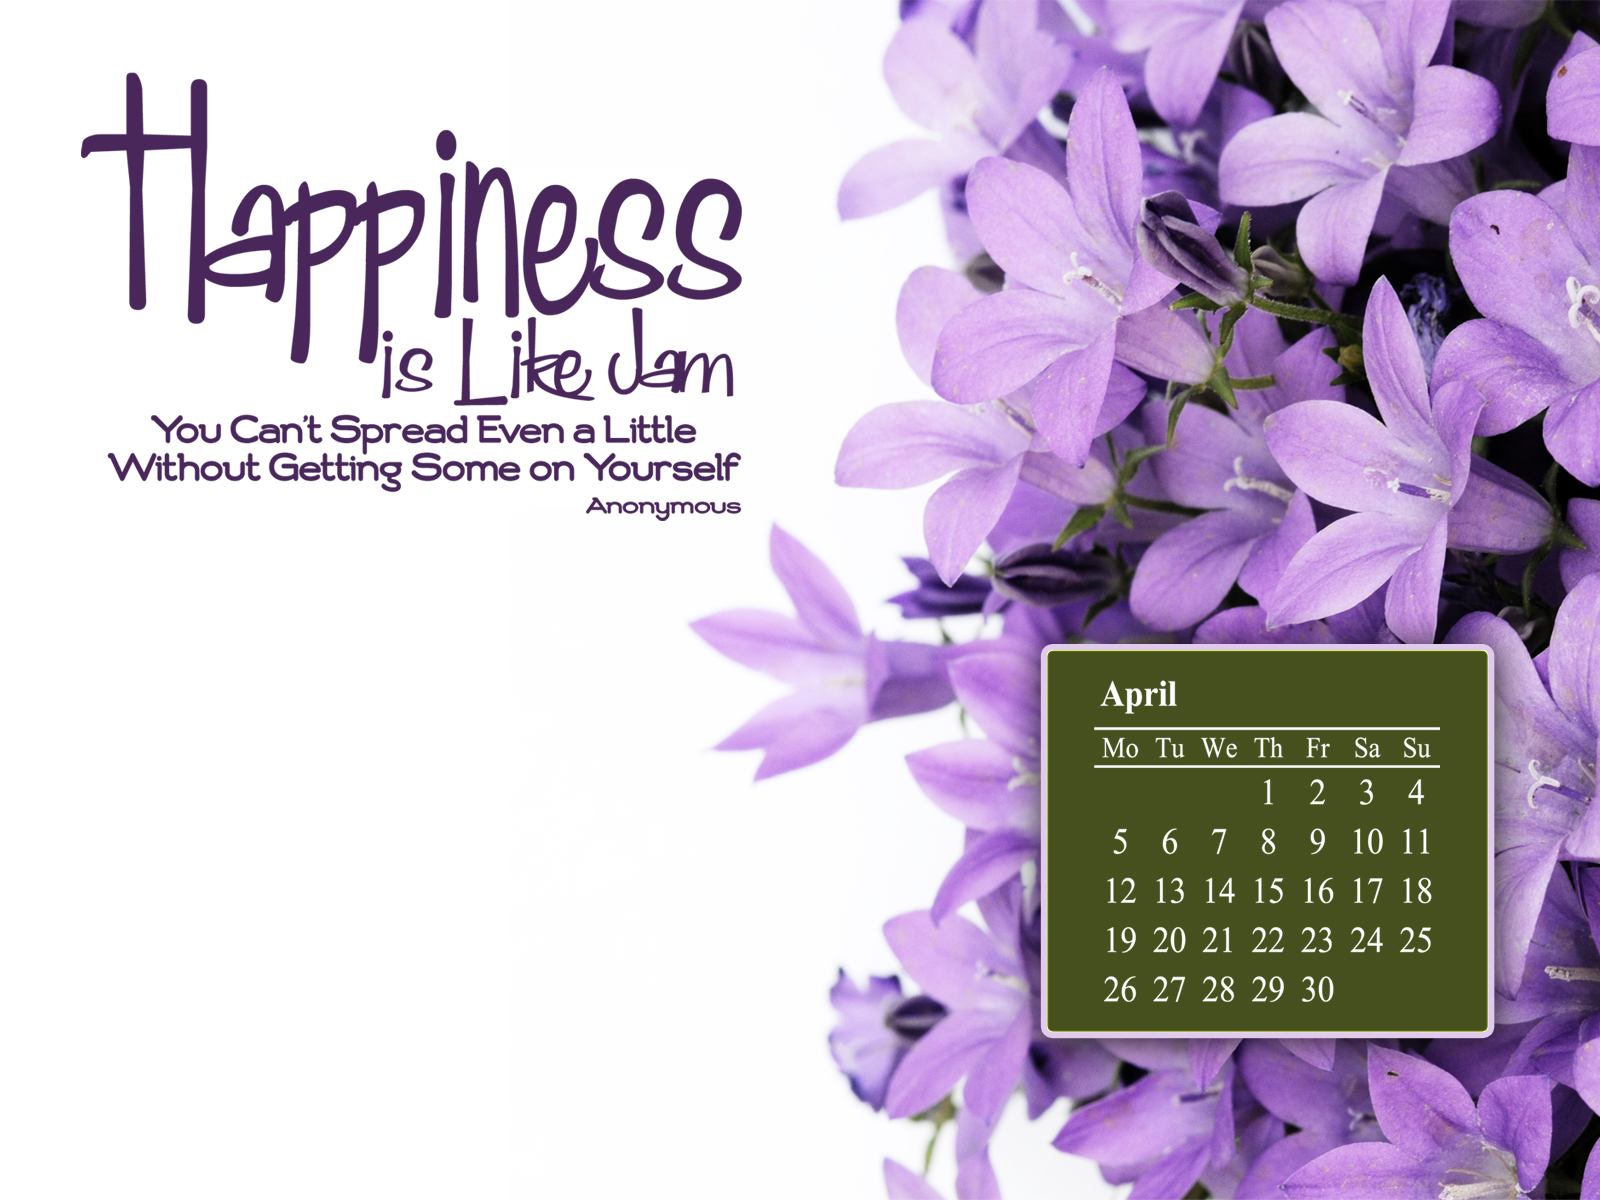 April Calendar Desktop Wallpaper